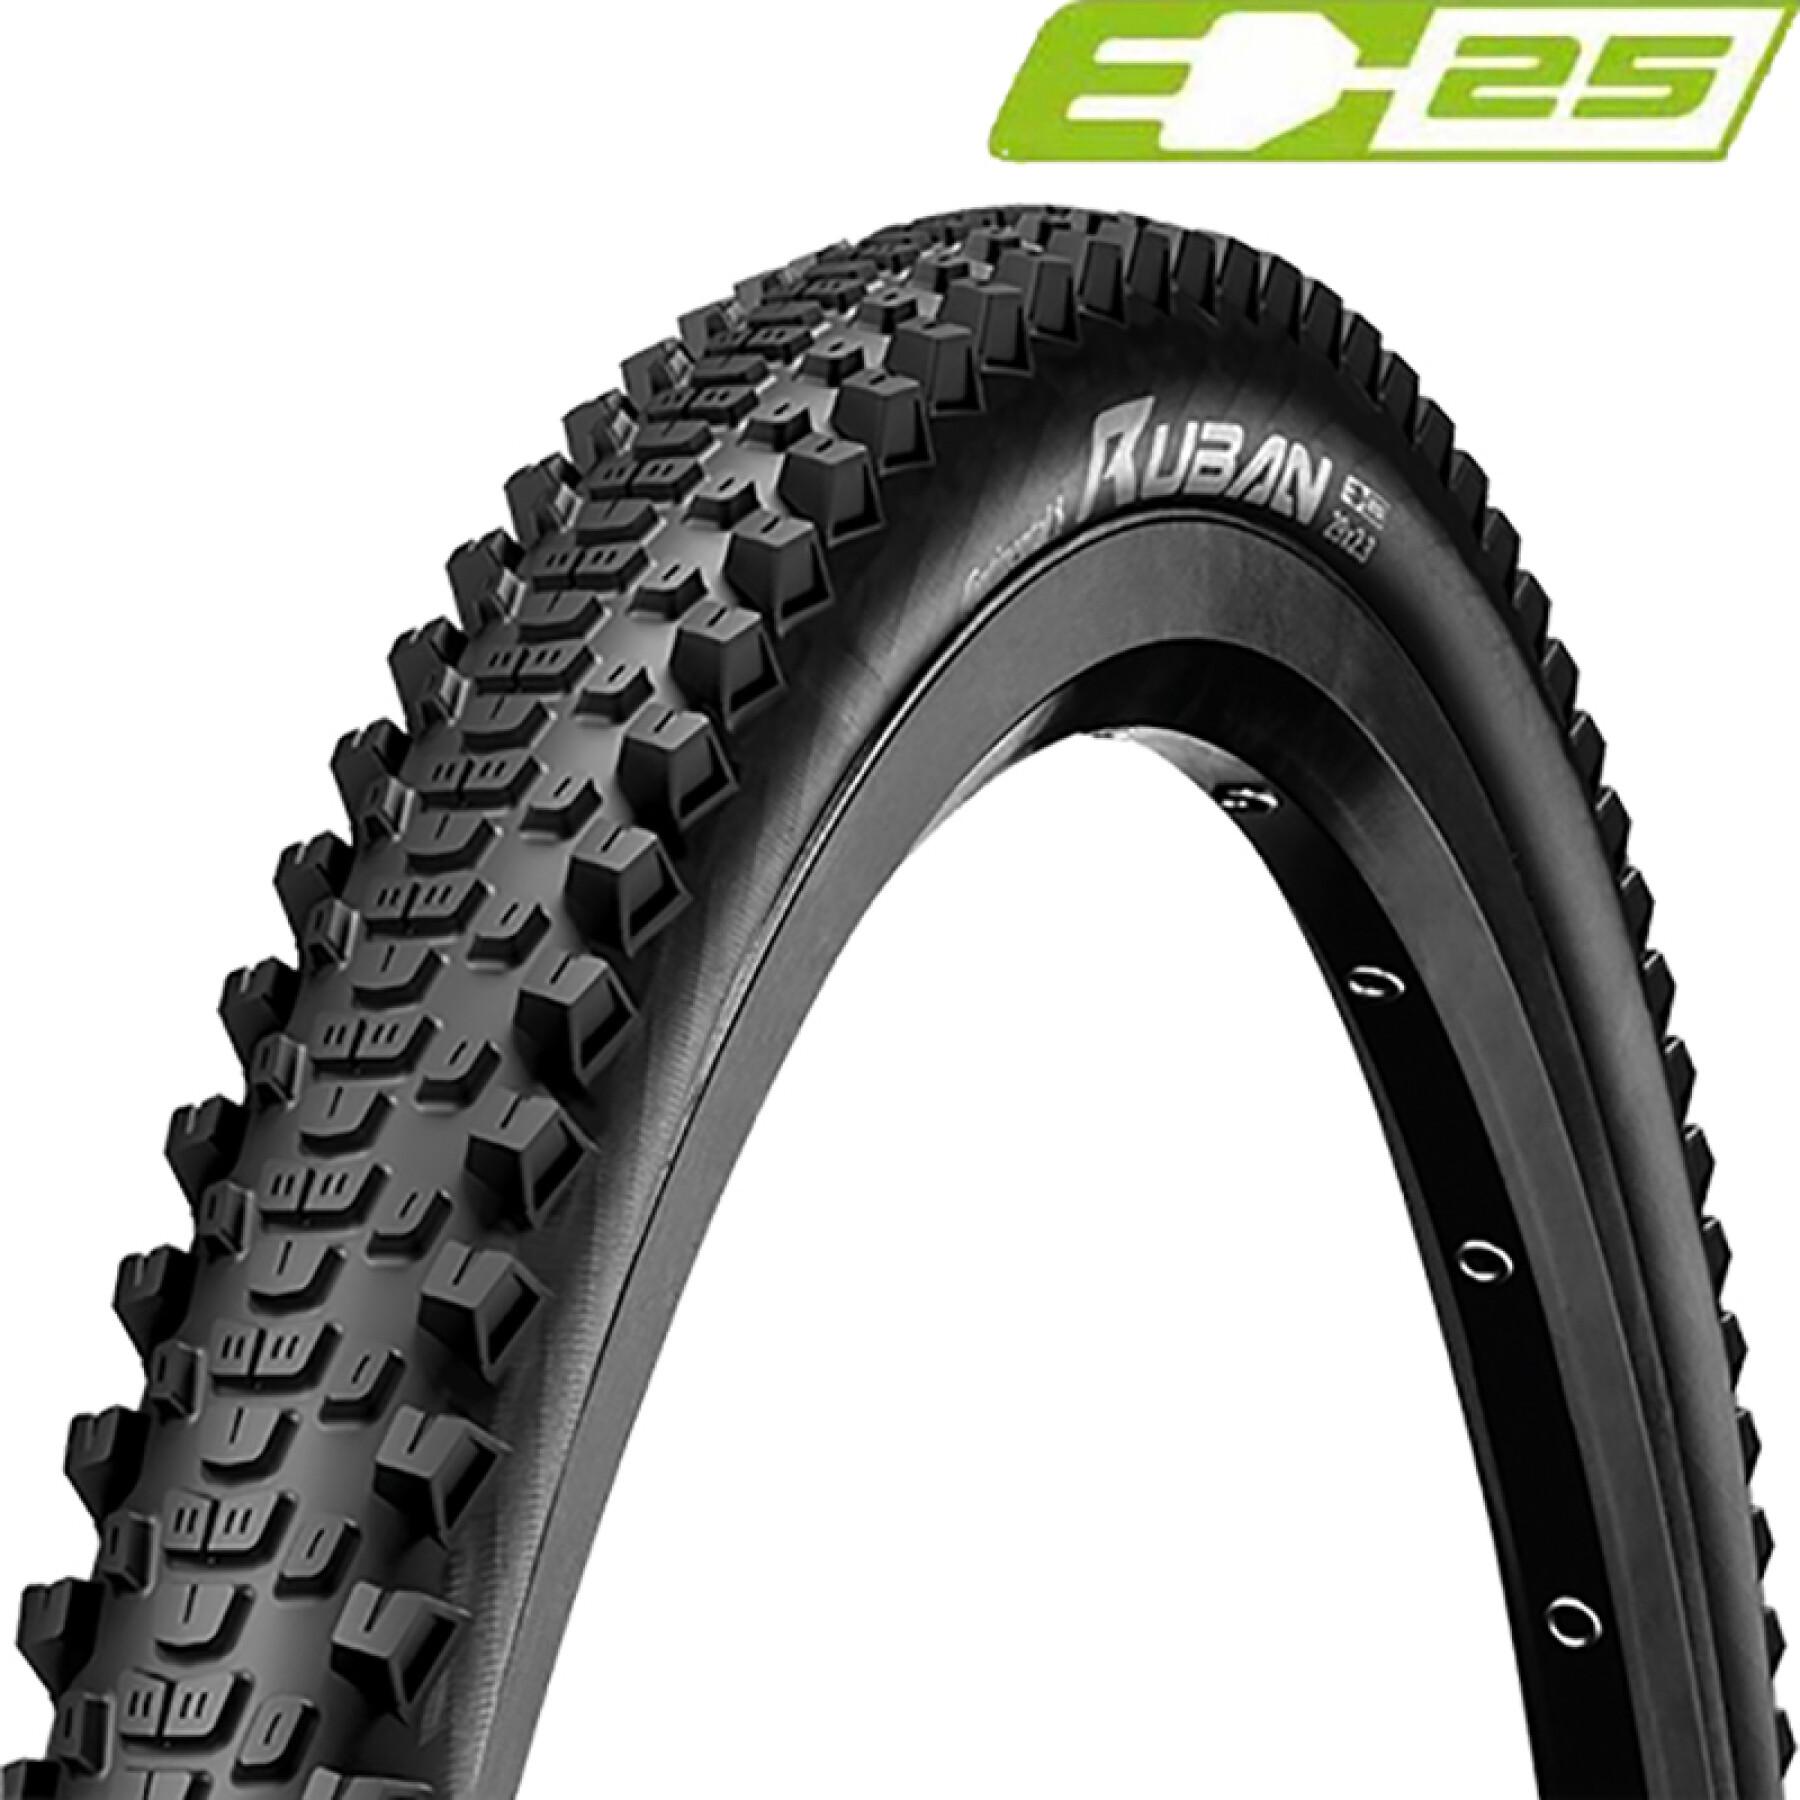 Rigid mountain bike tire Continental Ruban 54-584